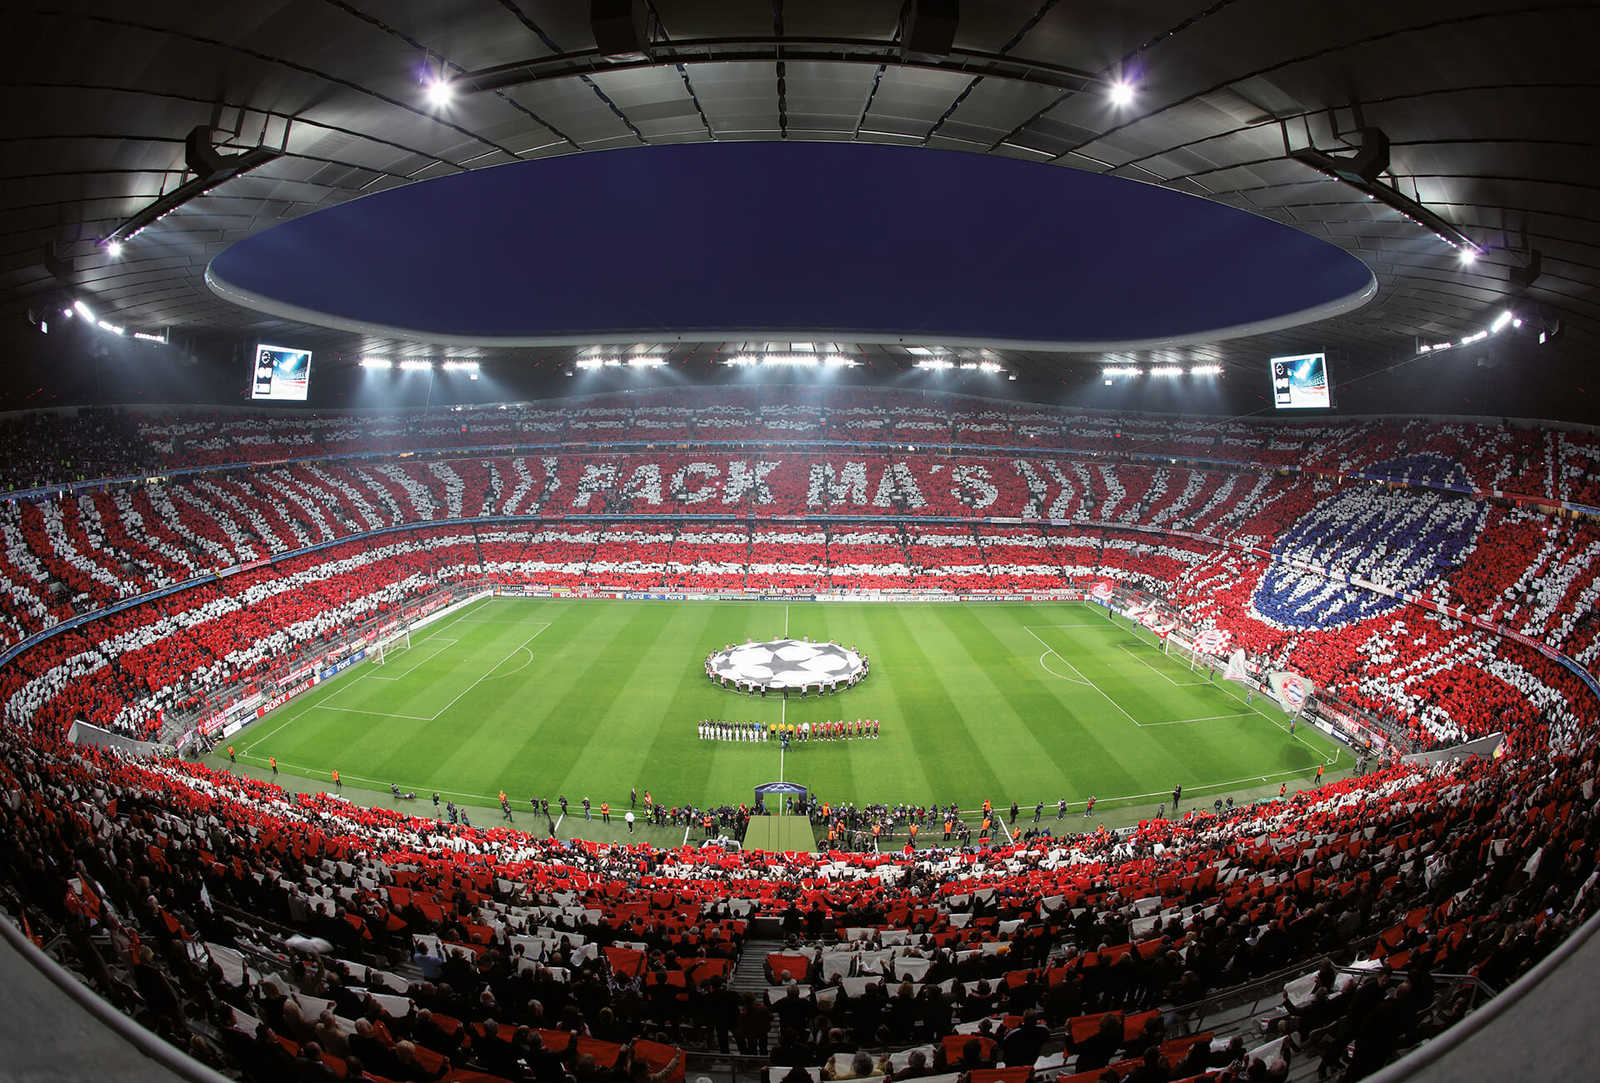             Fototapete FC Bayern Stadion & Fan Choreographie
        